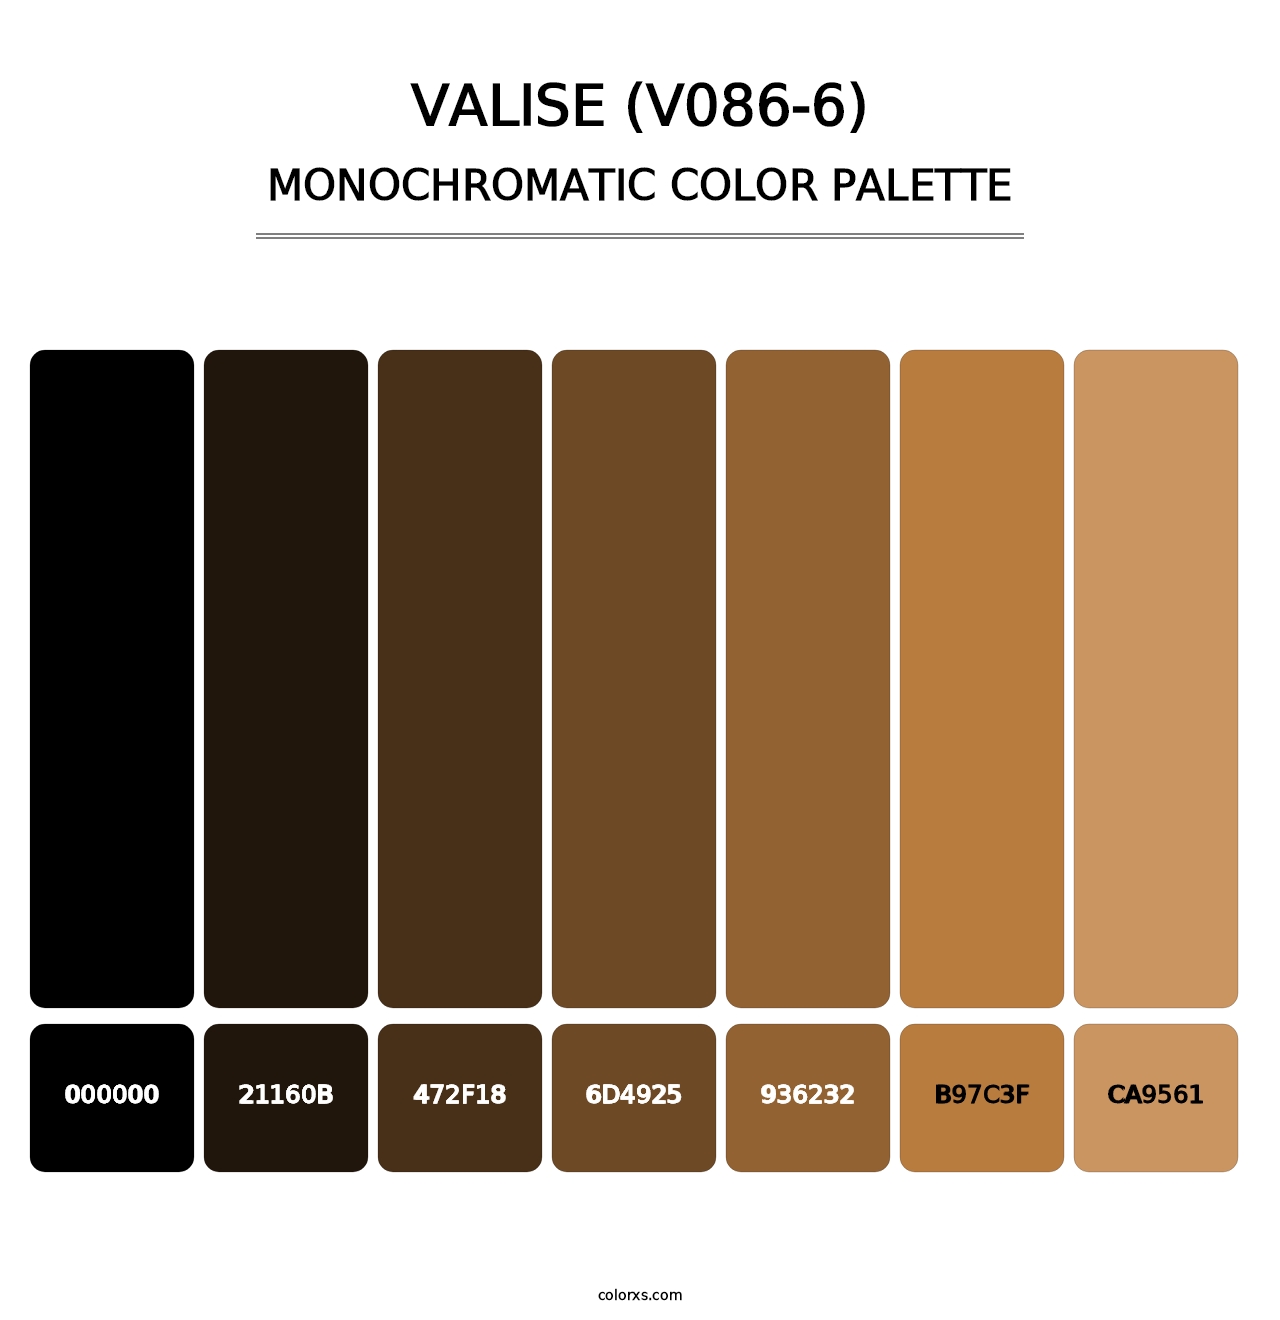 Valise (V086-6) - Monochromatic Color Palette